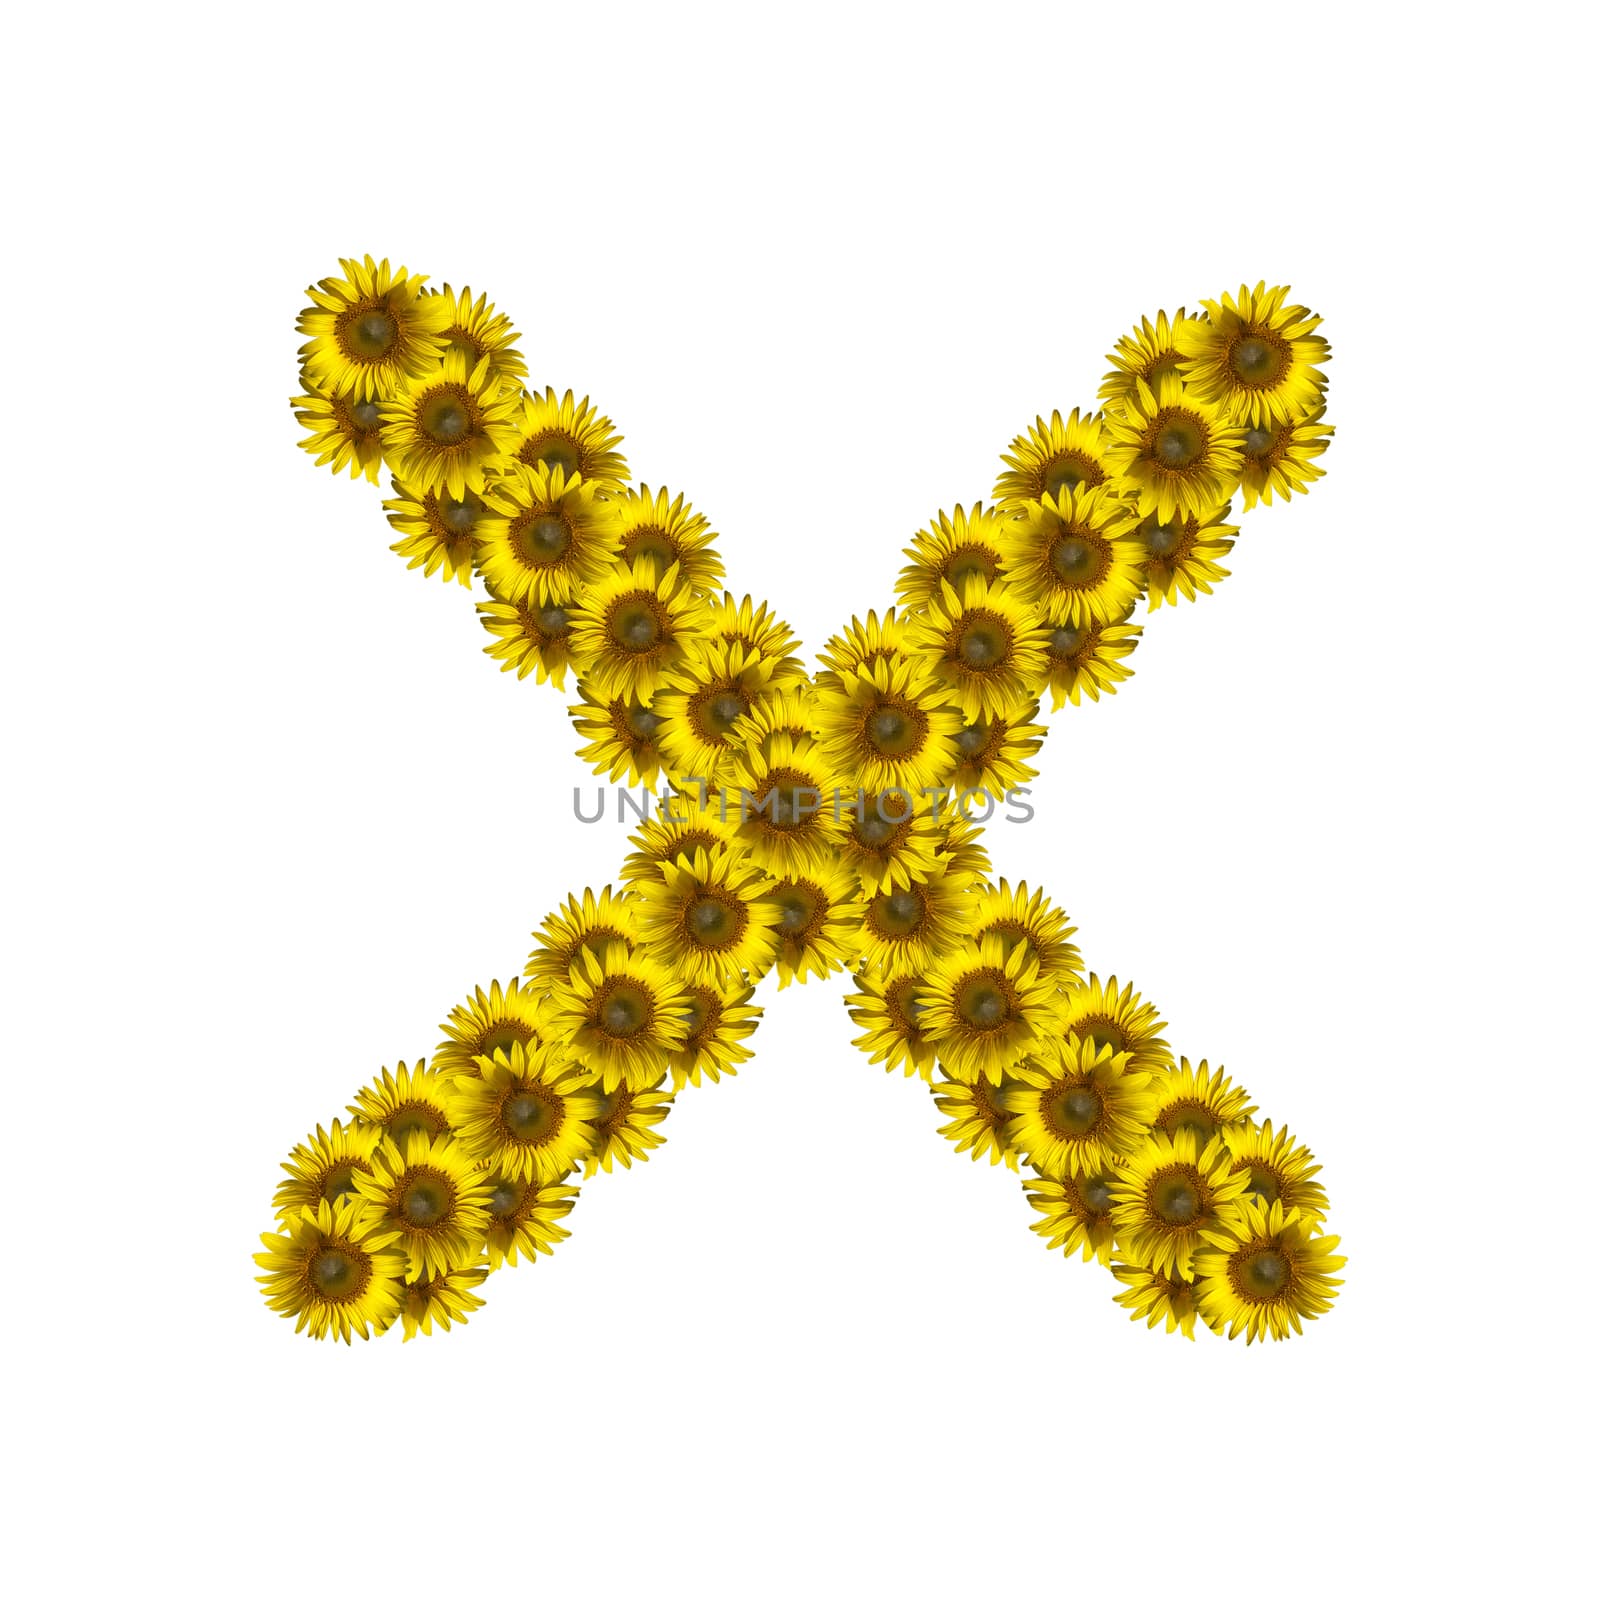 Sunflower alphabet isolated on white background, letter X